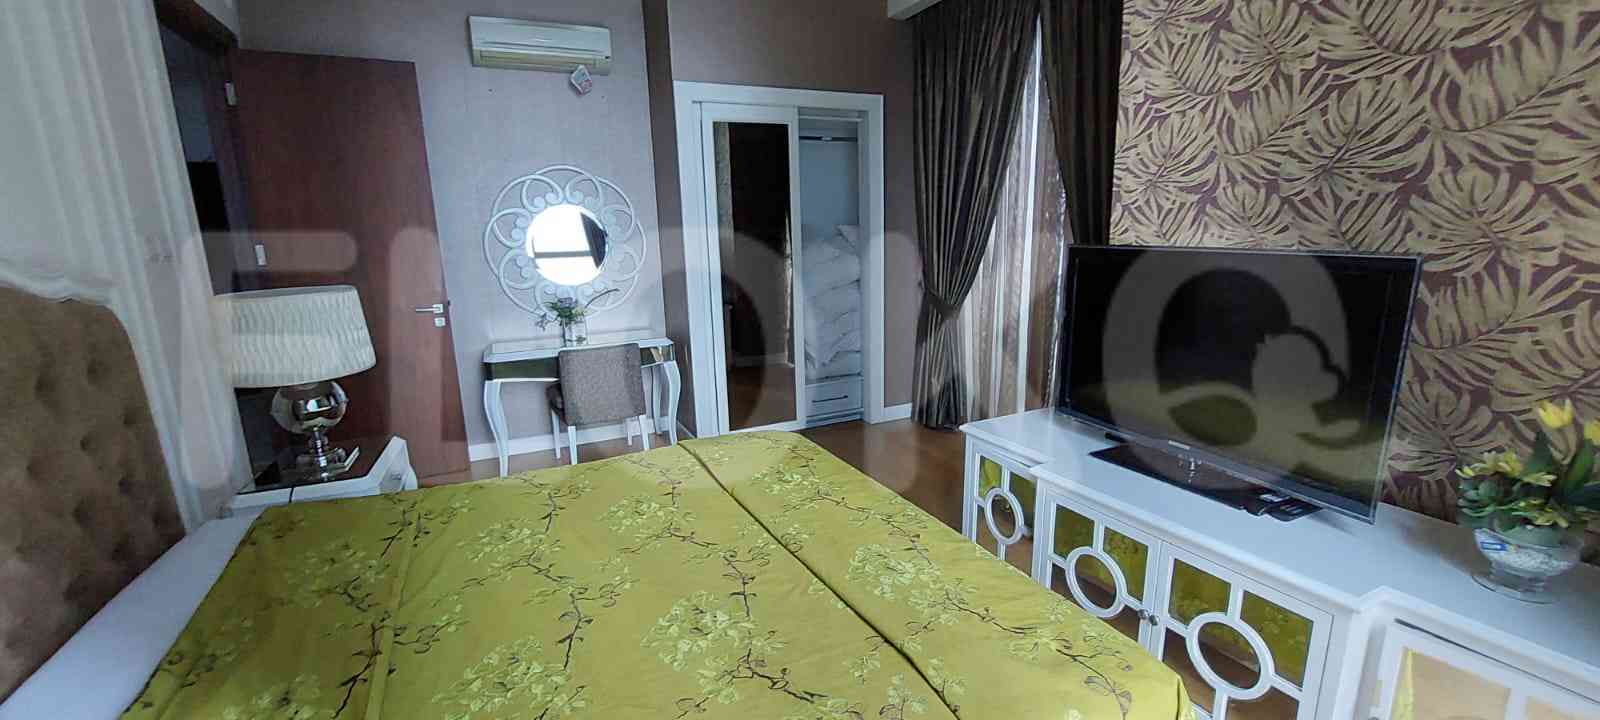 2 Bedroom on 19th Floor for Rent in Kemang Village Residence - fkeb83 3